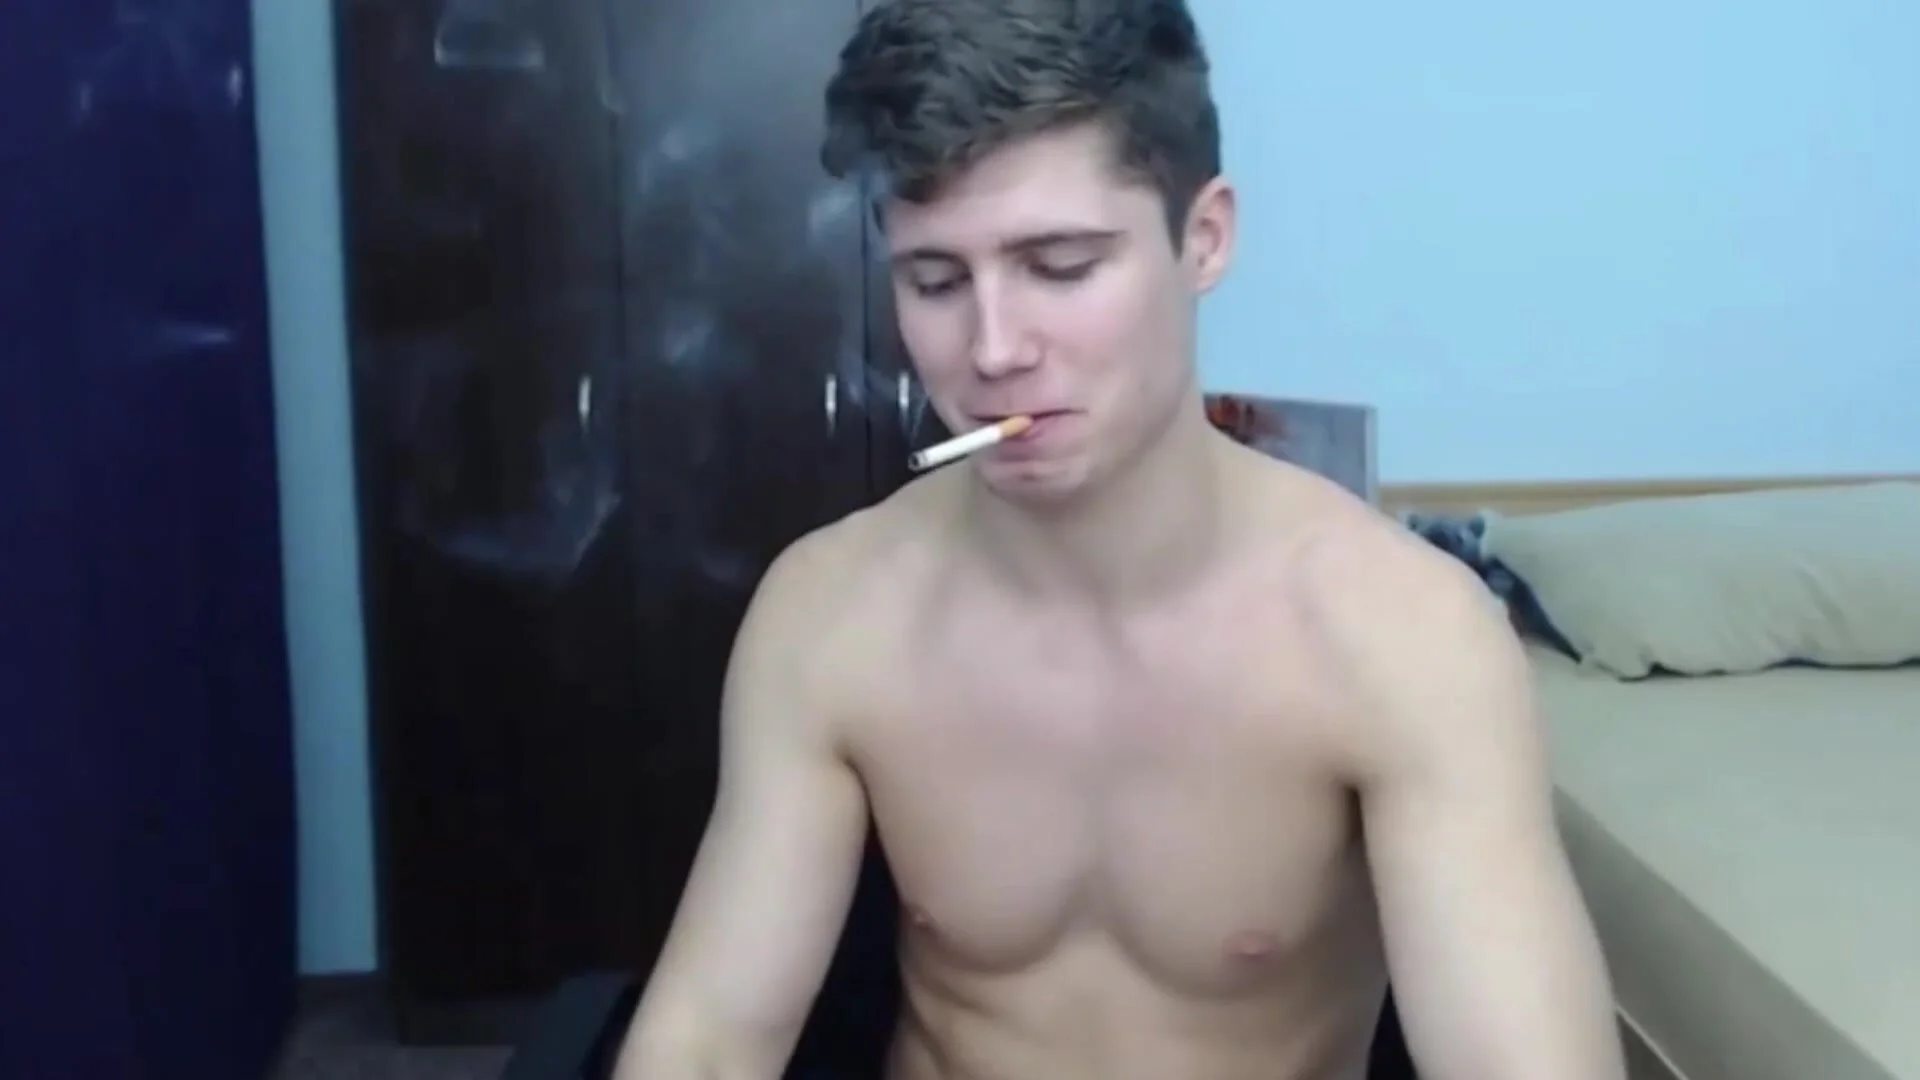 Hot boy smoking - video 4 - ThisVid.com